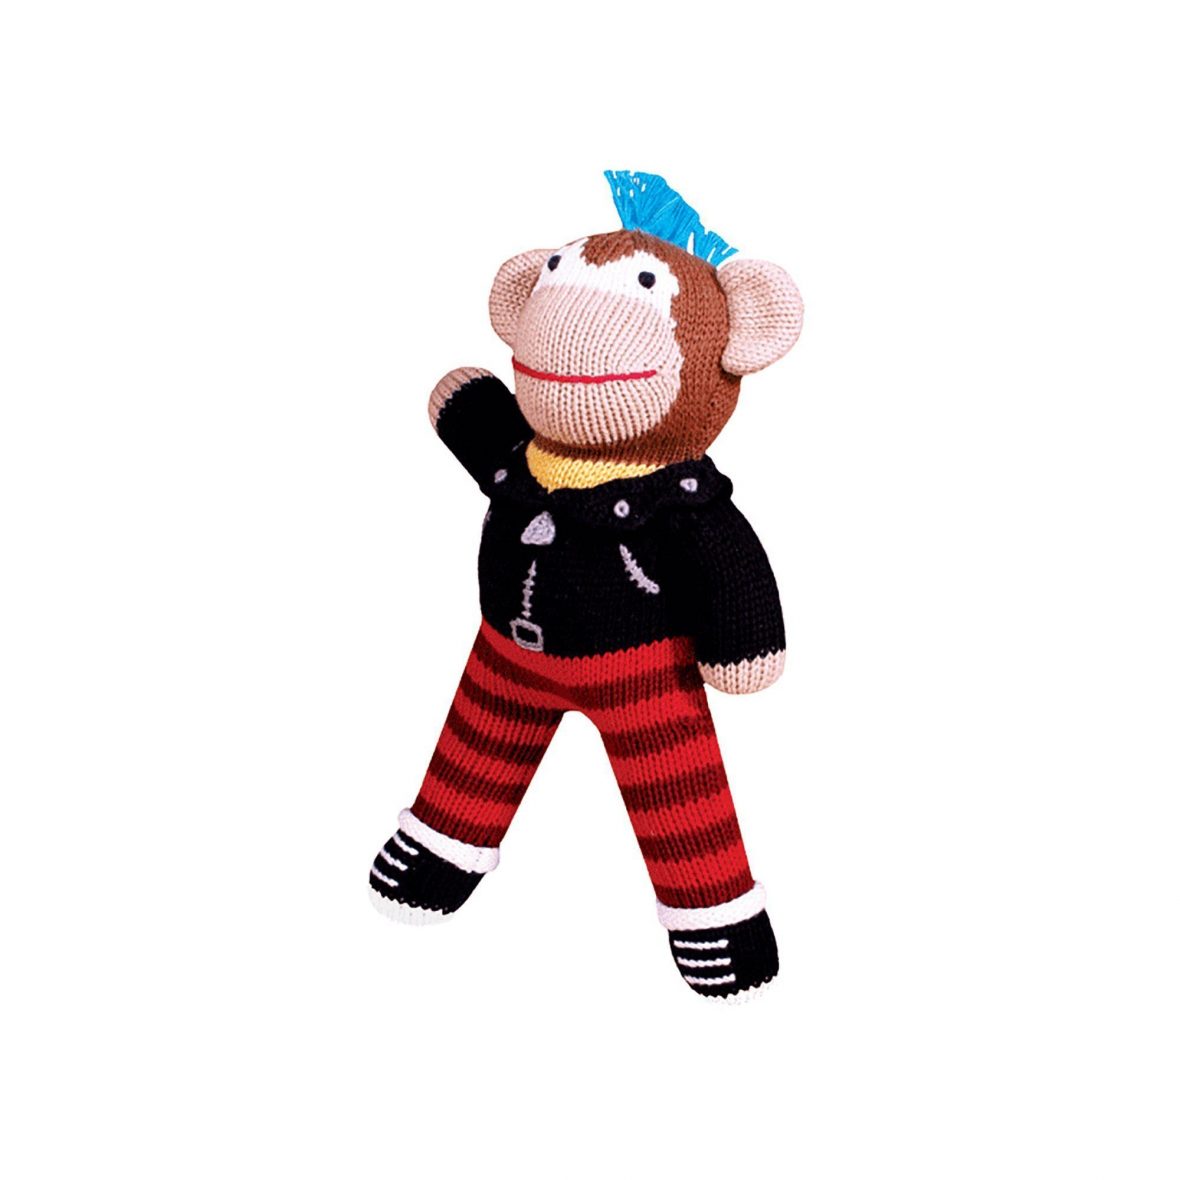 zubels-toy-rock-monkey-12-5388786761785